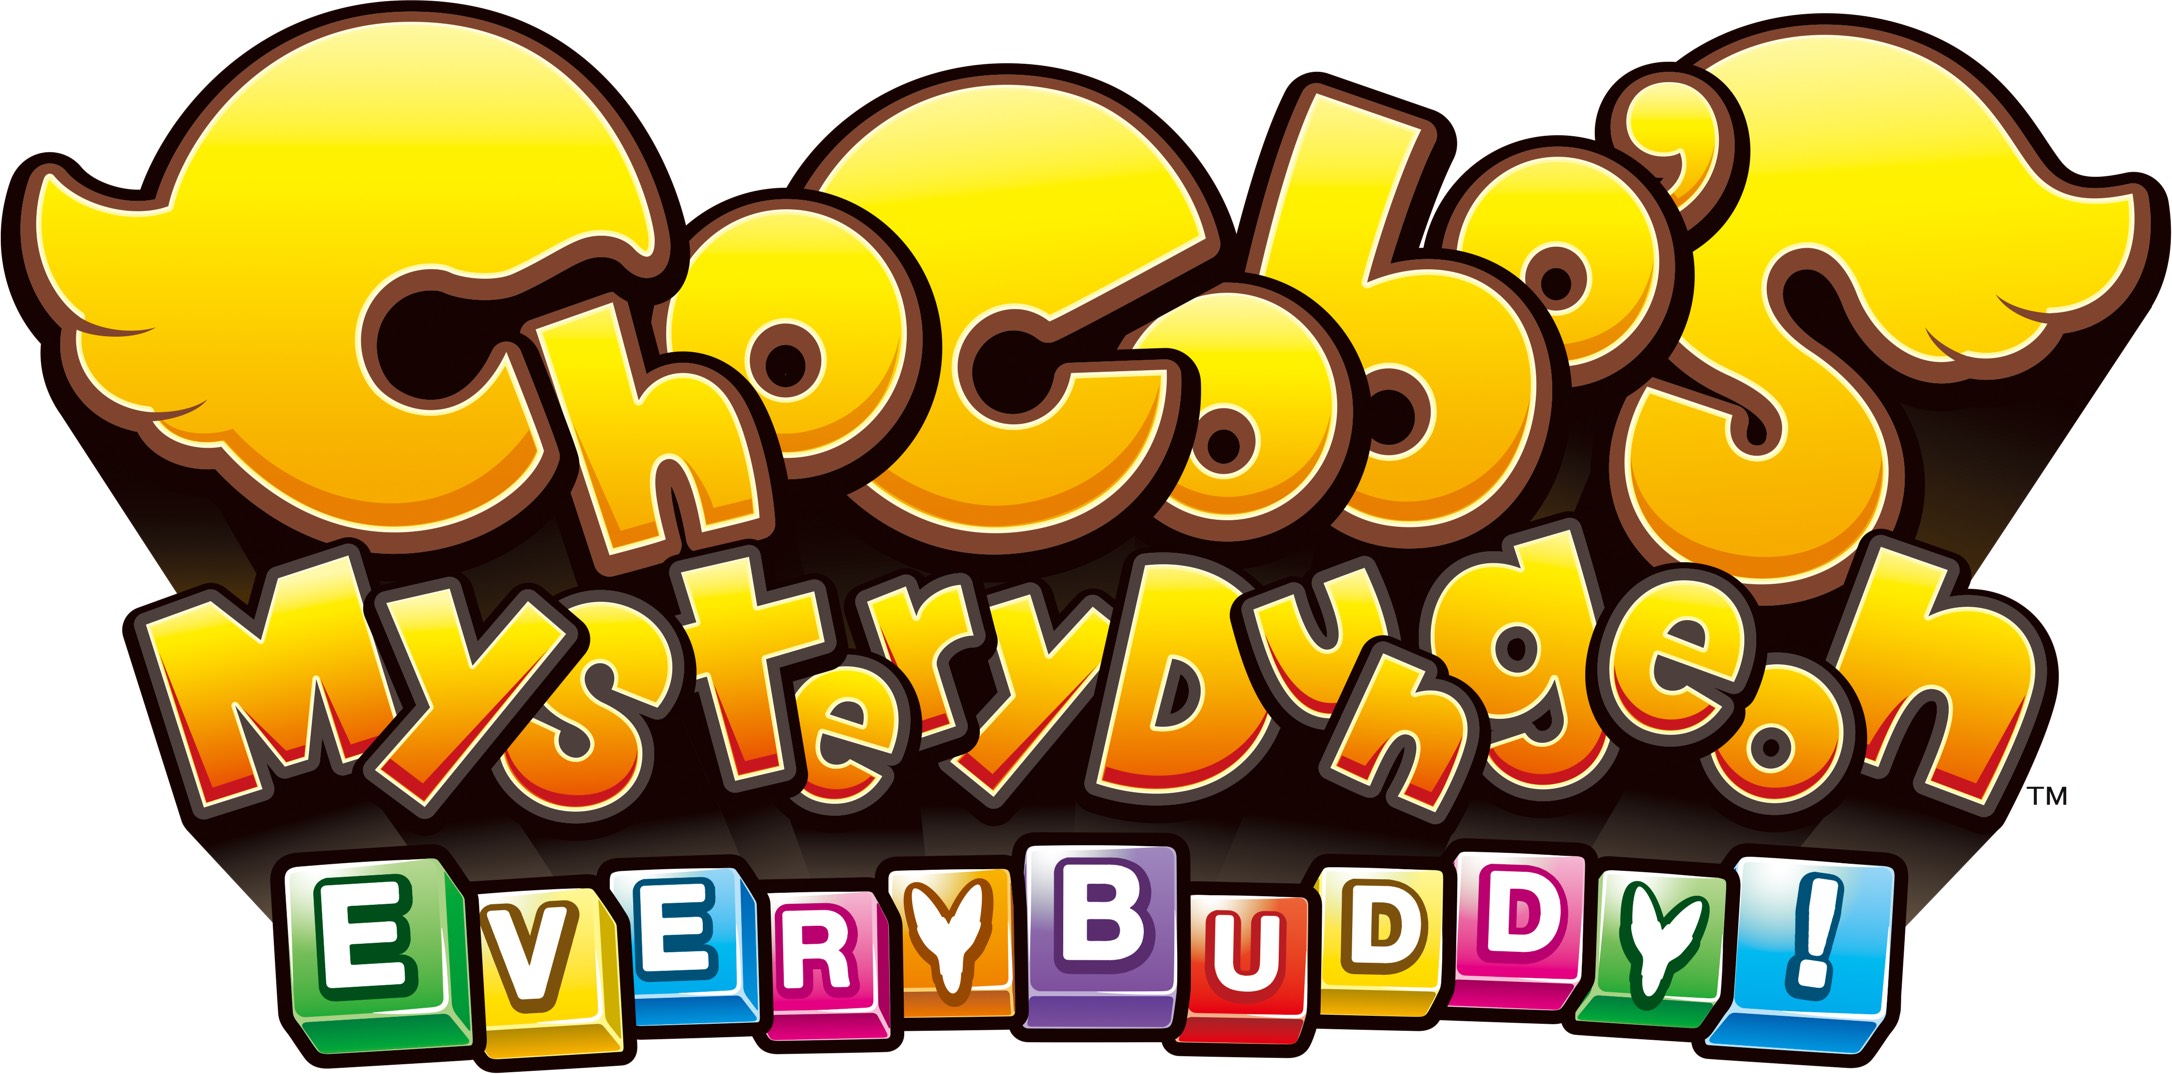 Chocobos Mystery Dungeon Every Buddy Logo 001